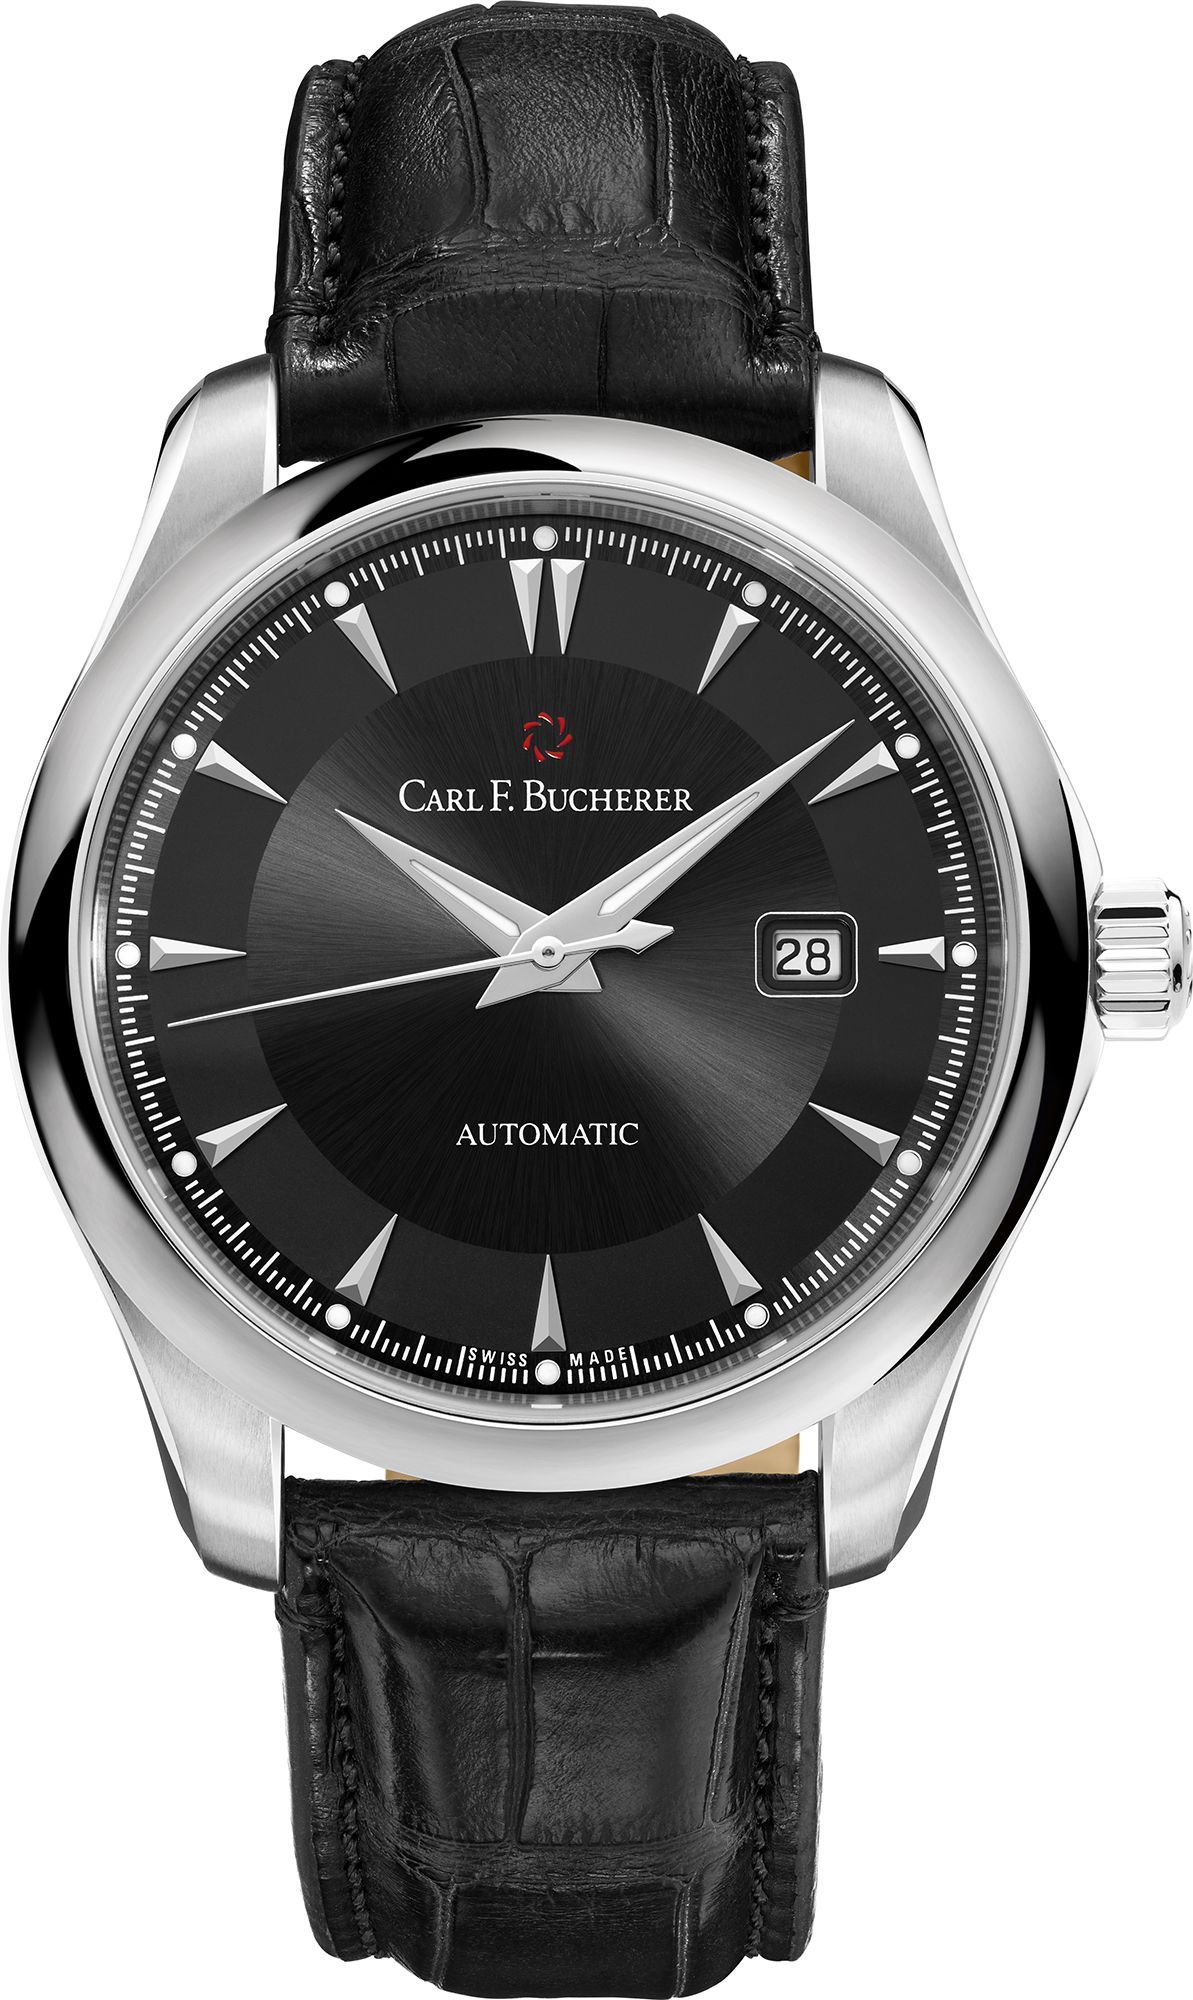 Carl F. Bucherer Manero AutoDate Black Dial 42 mm Automatic Watch For Men - 1